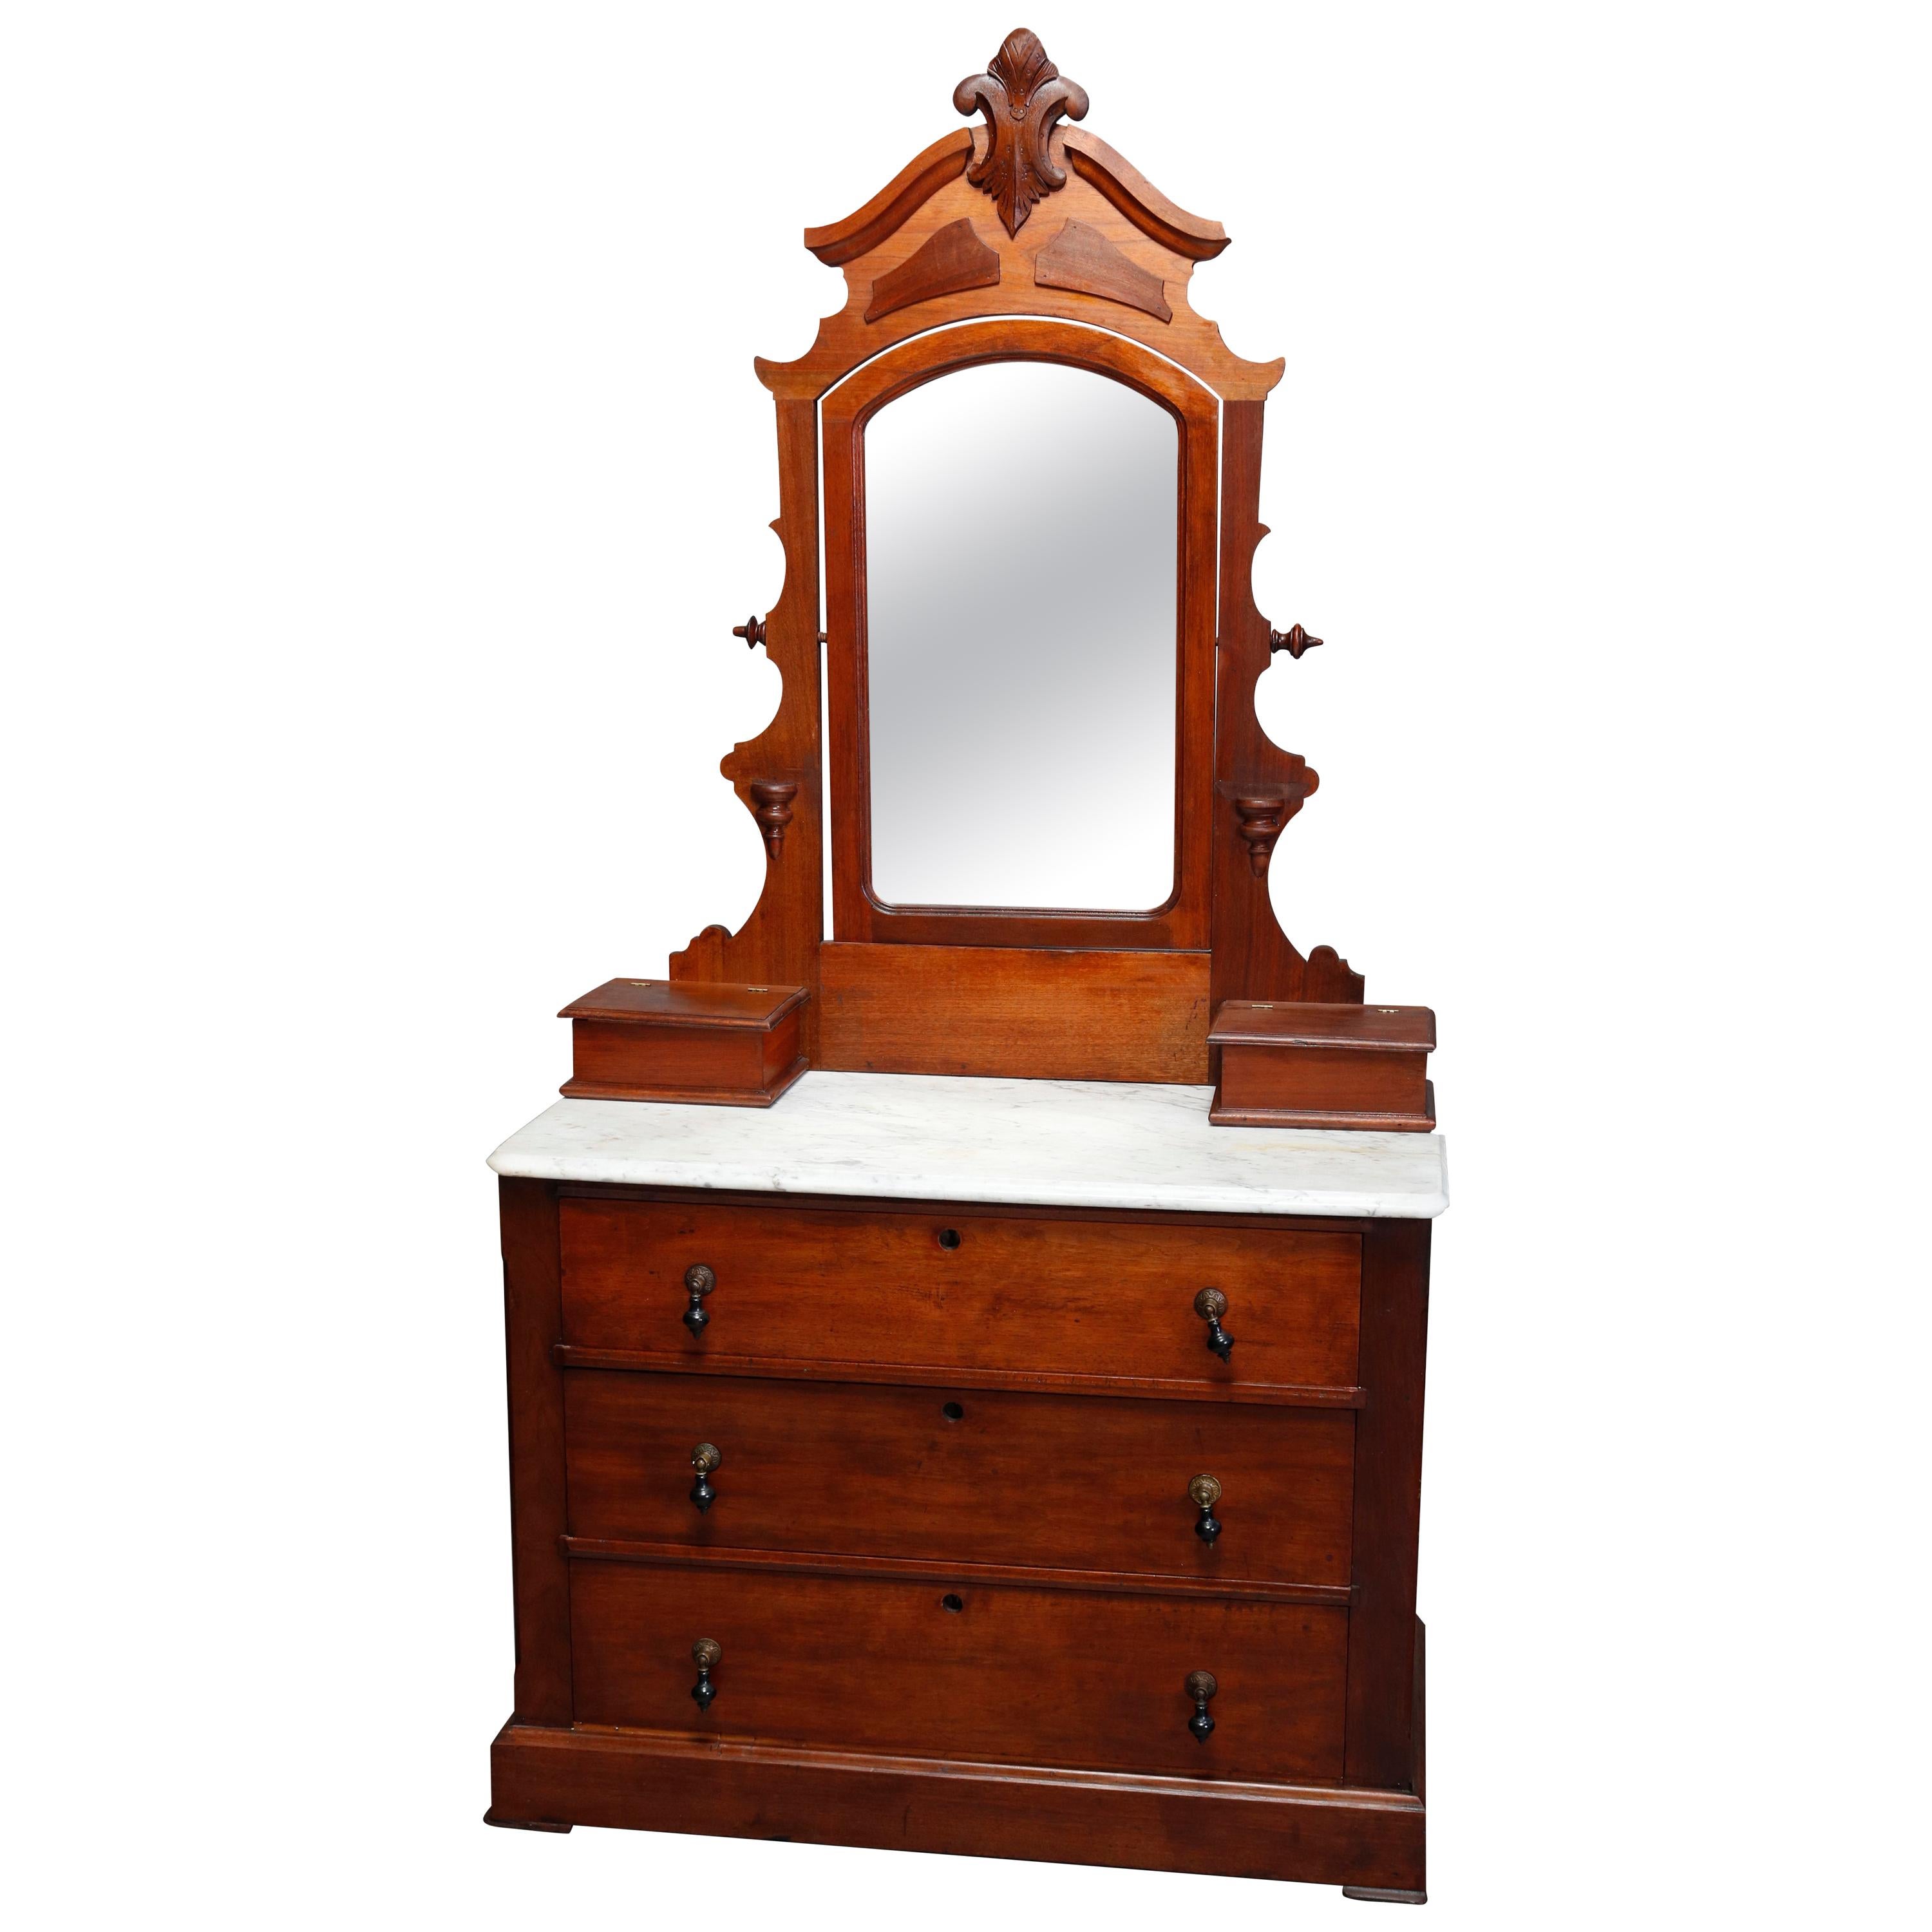 Antique Victorian Carved Walnut Marble-Top Mirrored Dresser, circa 1890